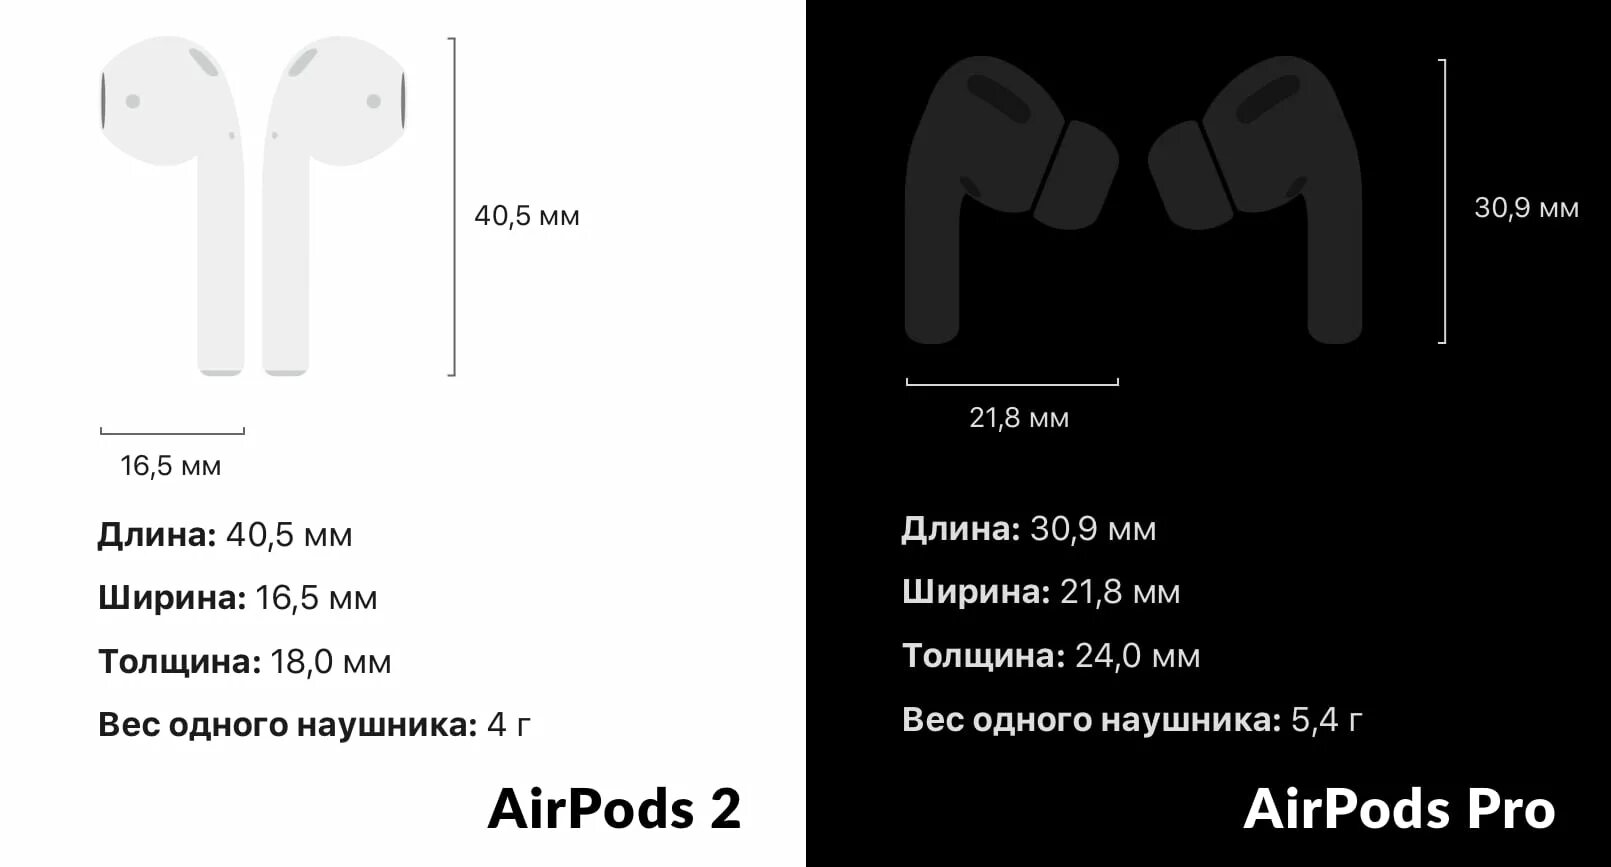 Наушники Apple AIRPODS 3 габариты. Габариты и вес наушников AIRPODS 3. Вес наушников аирподс Pro 2. Габариты AIRPODS 2.